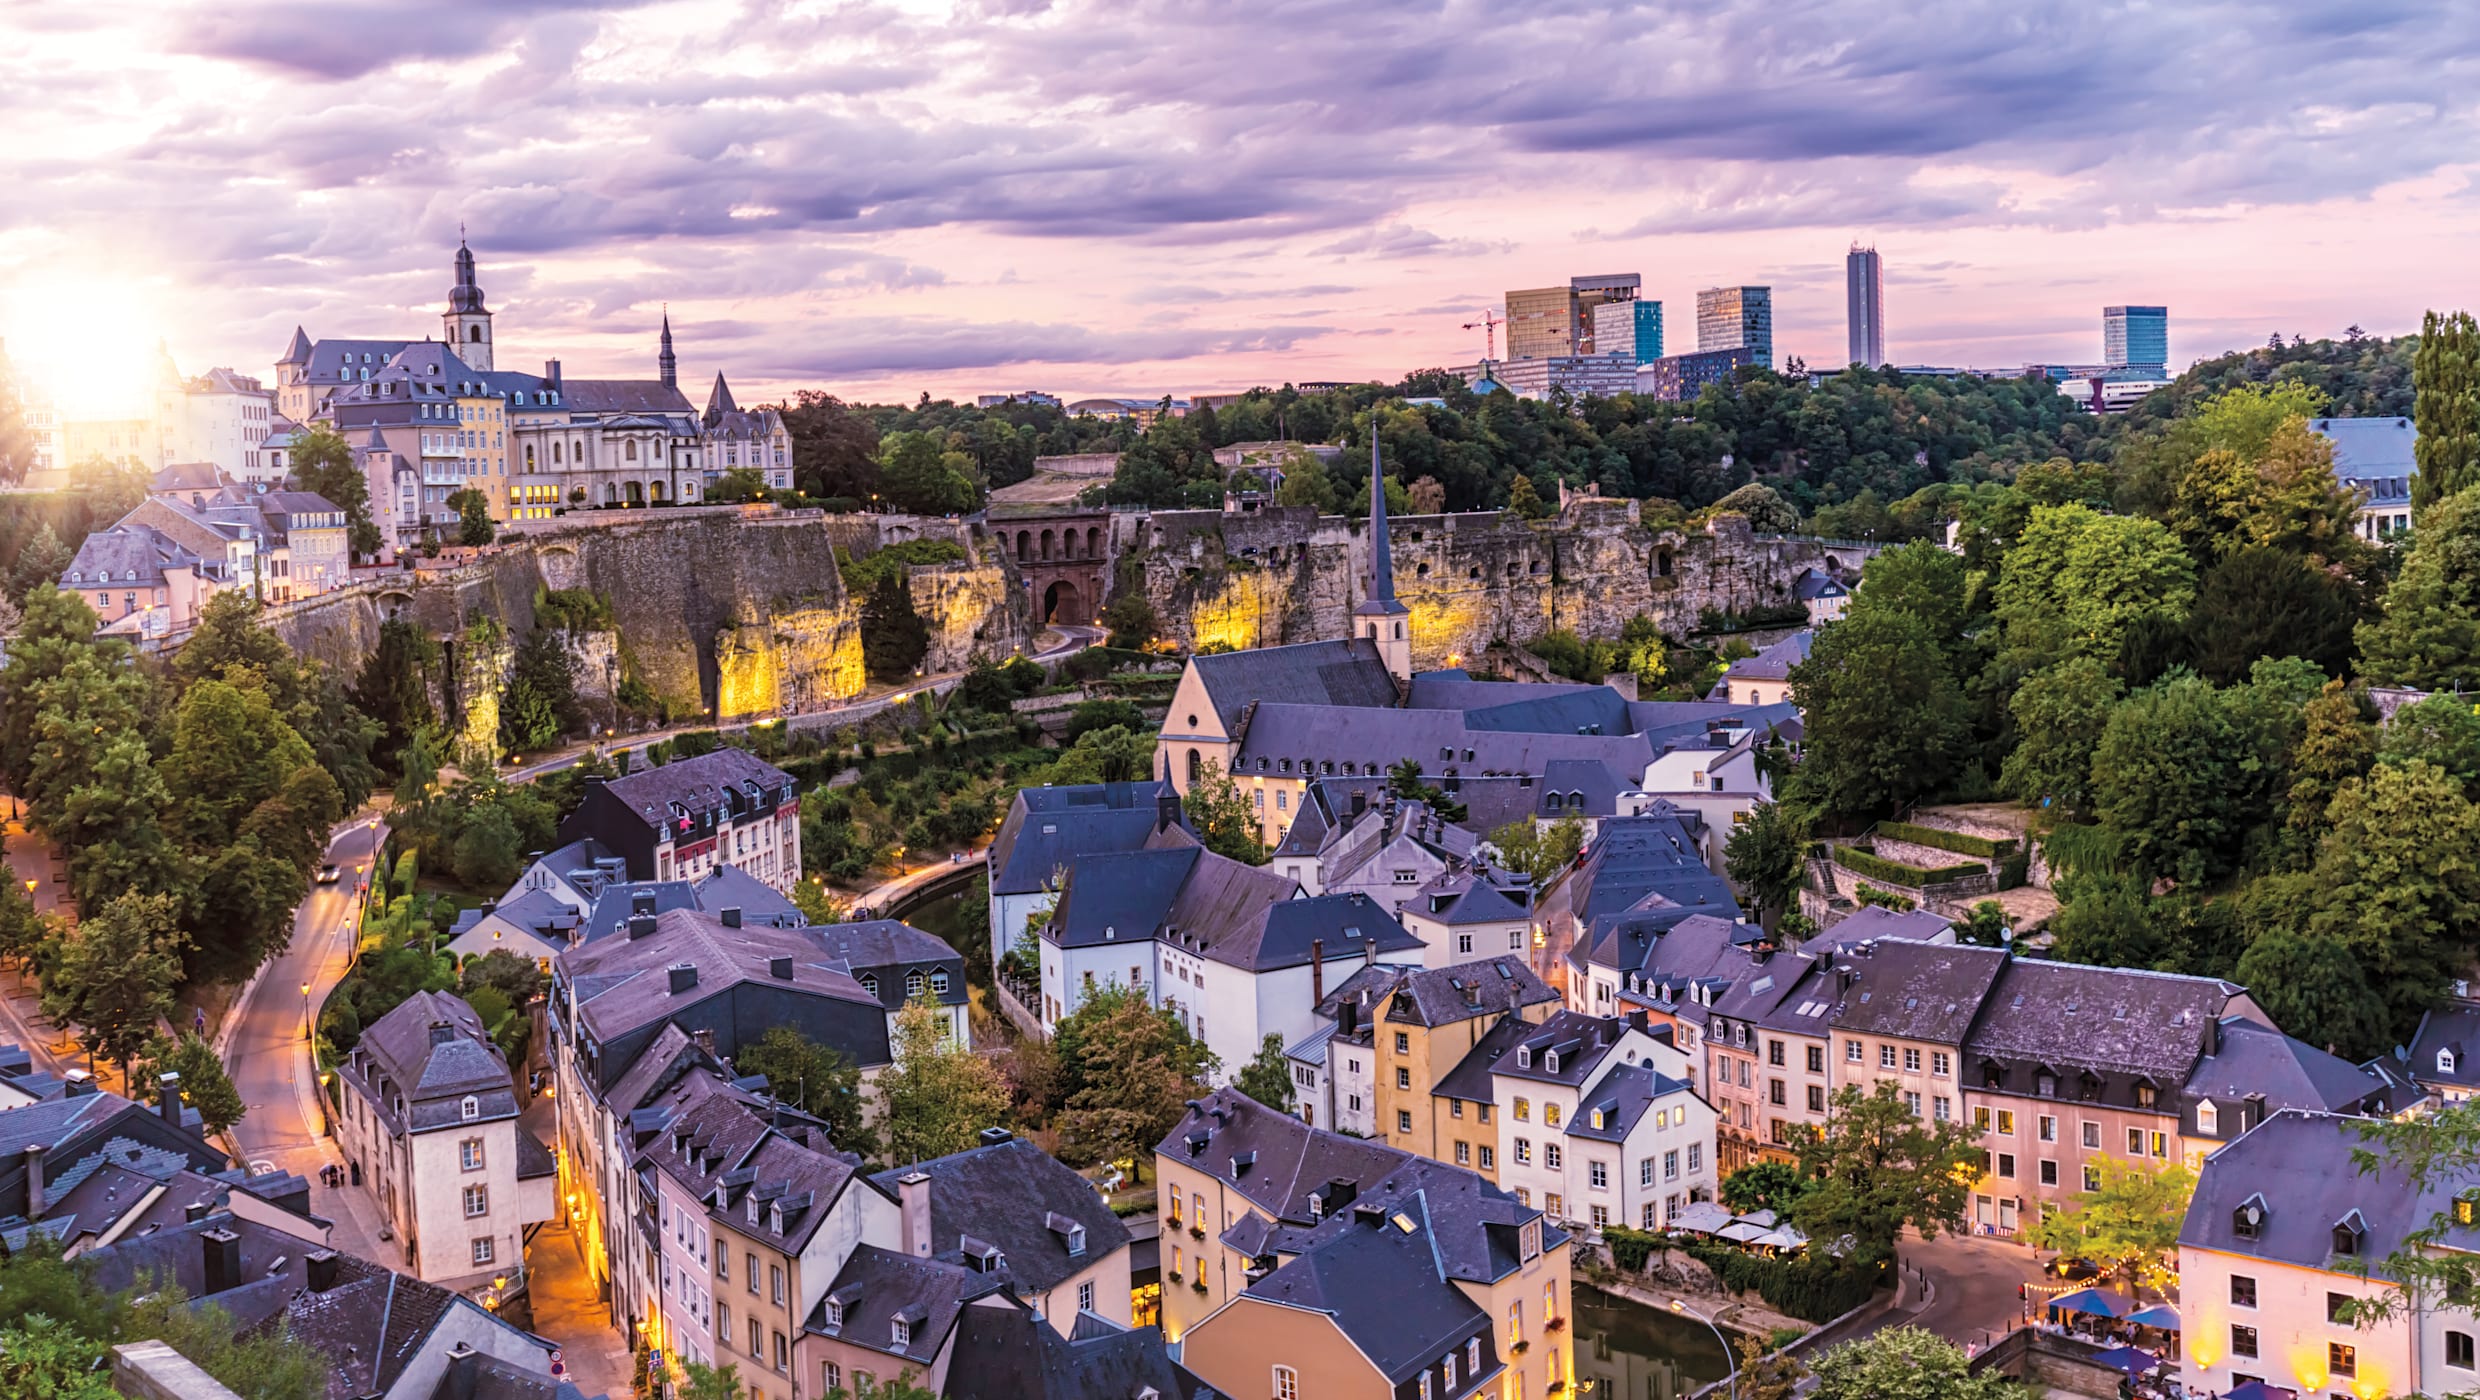 Luxemburg